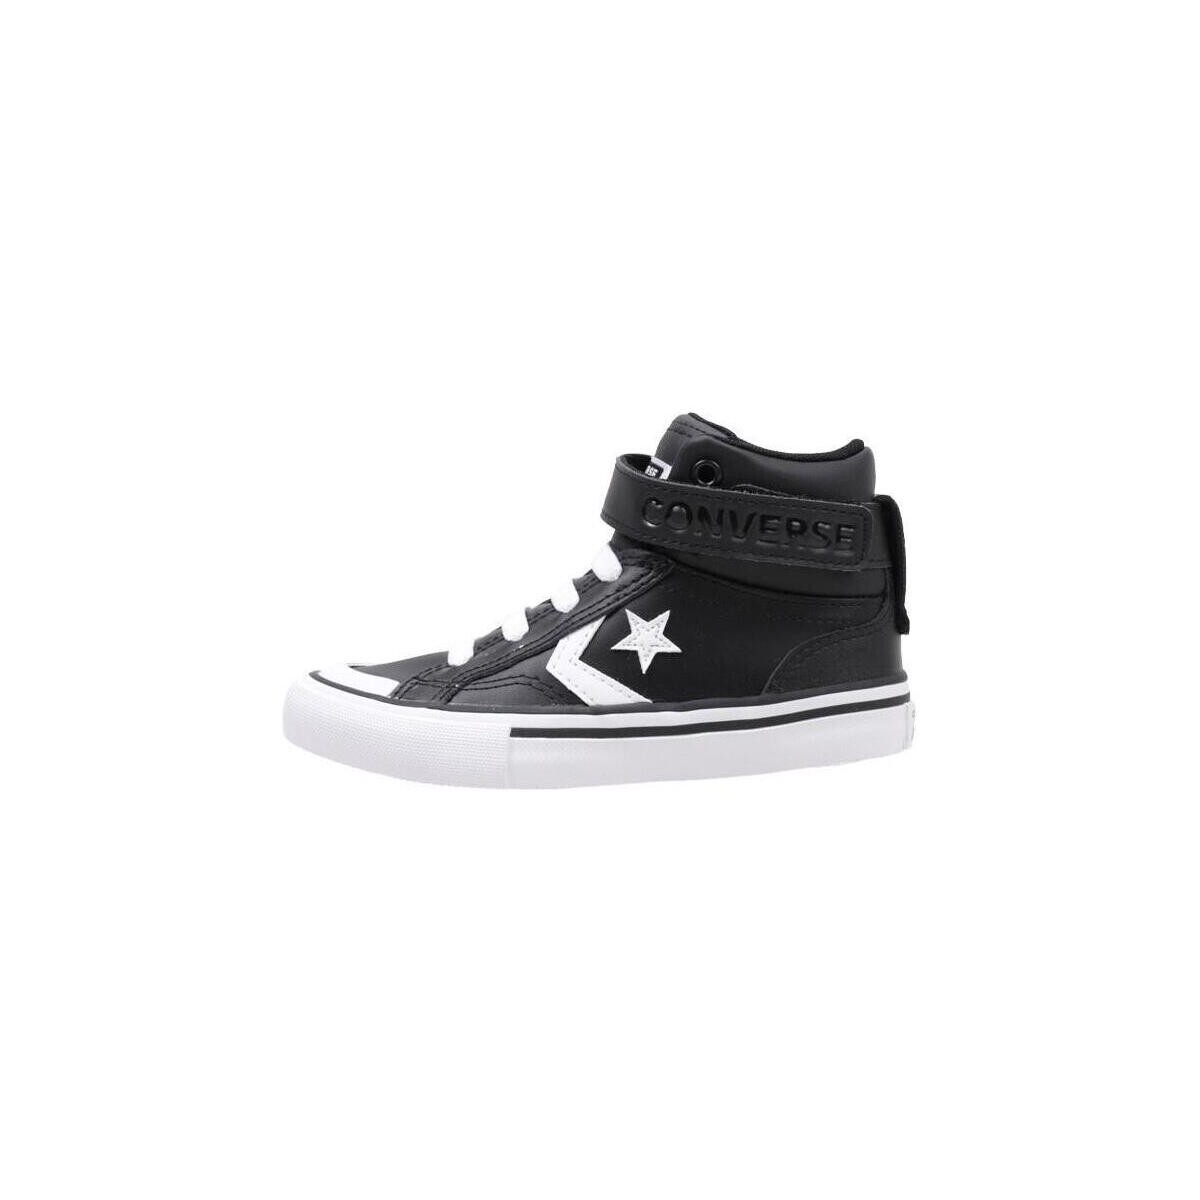 BLAZE STRAP Converse PRO 51,00 Schwarz € - Schuhe High LEATHER Sneaker Kind